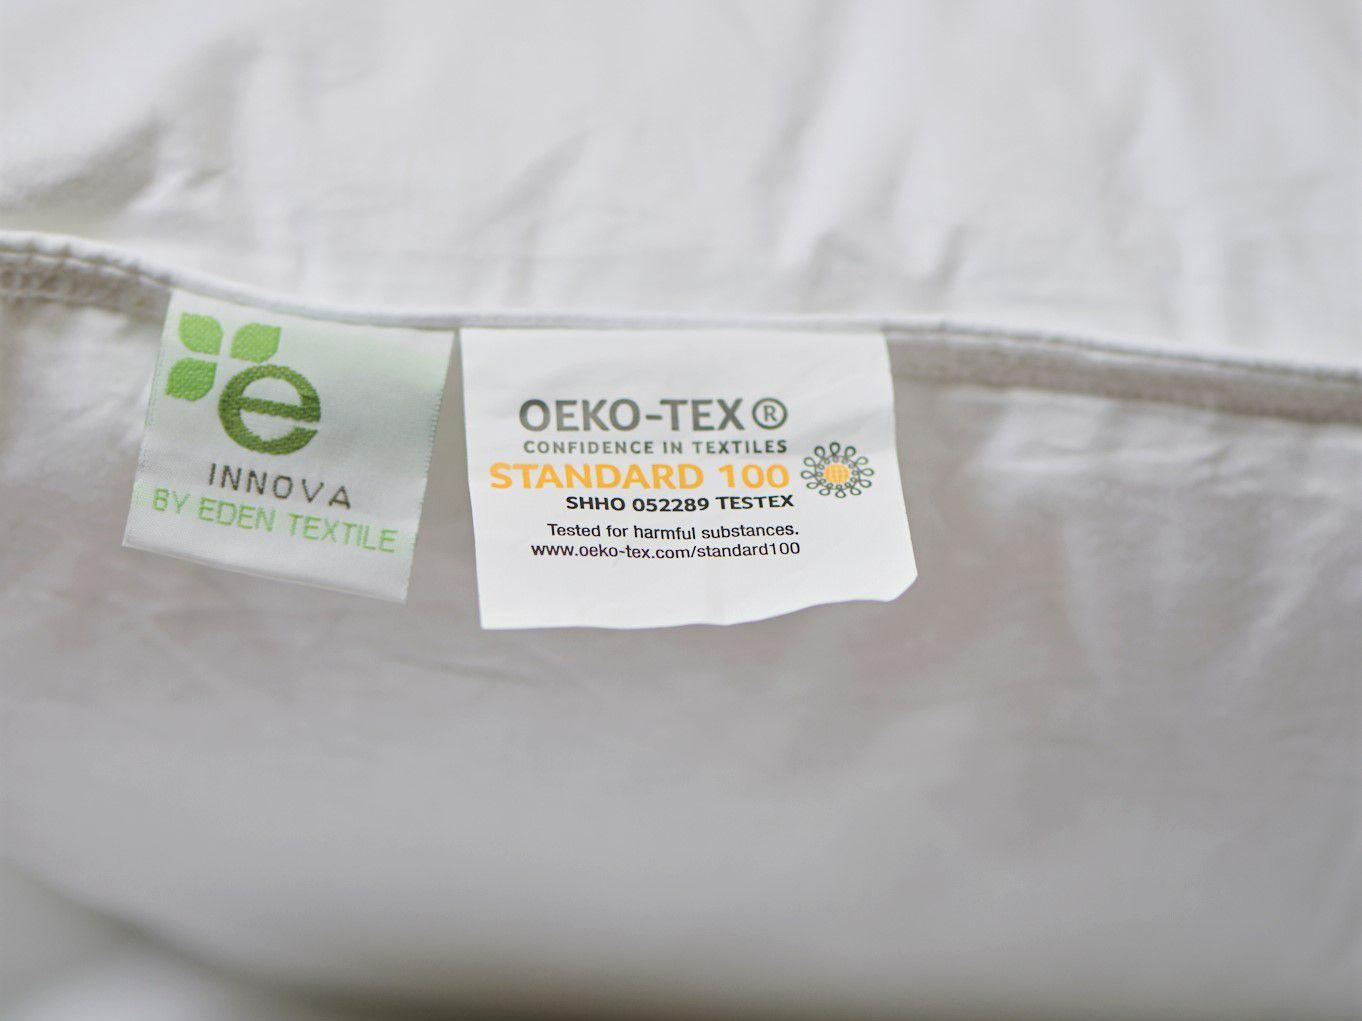 Eden Textile Pillows with Oeko-Tex Certification